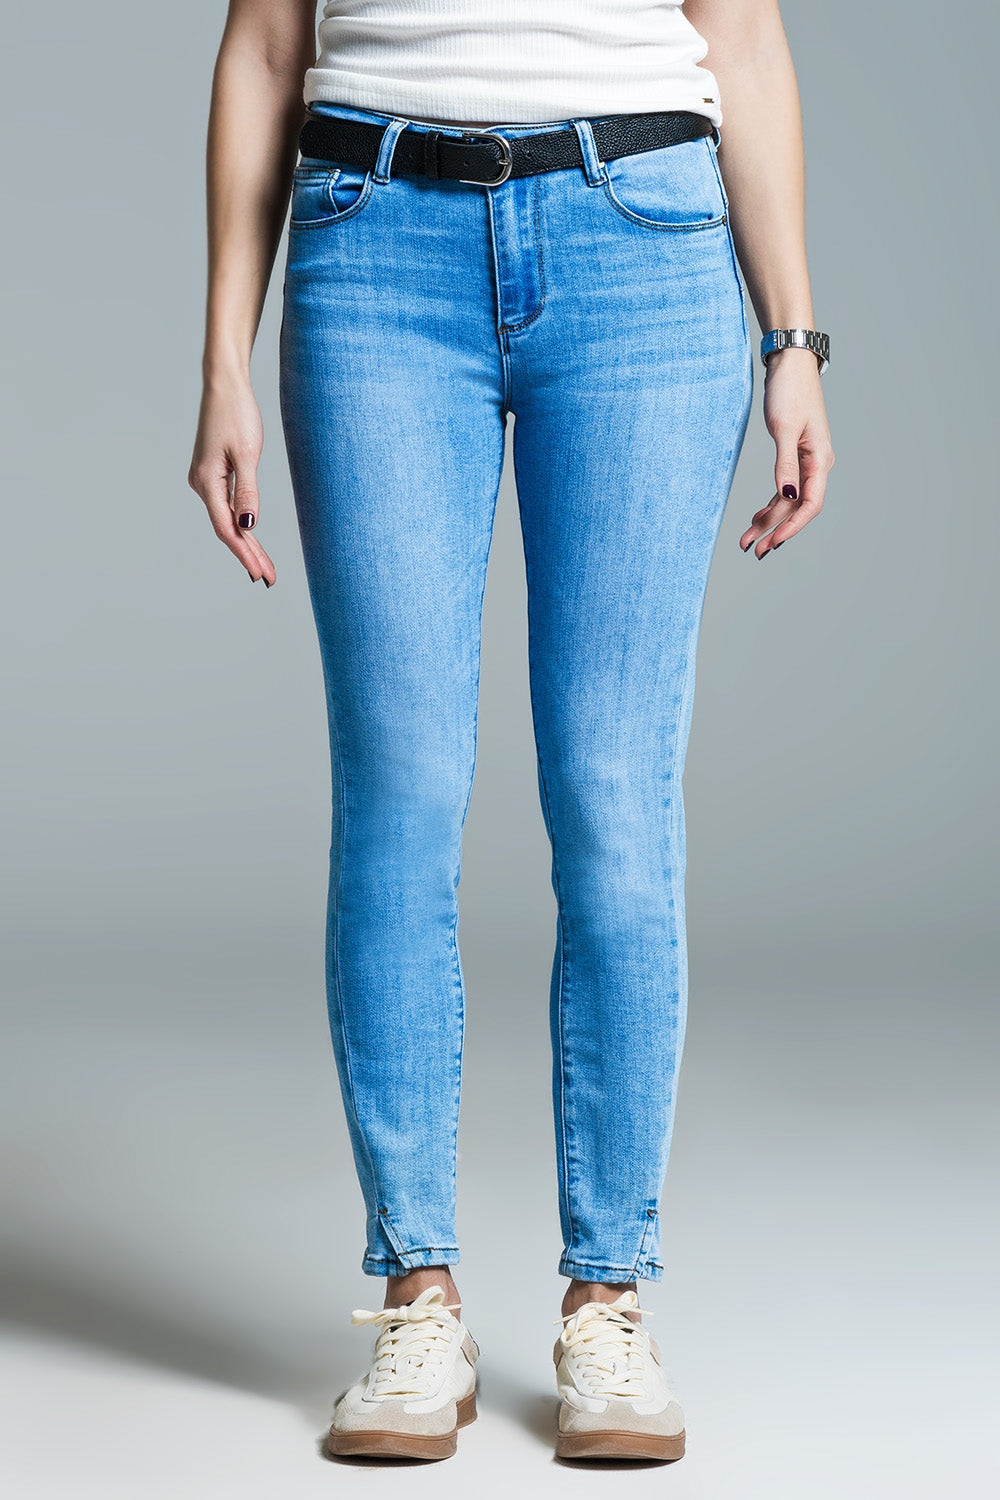 Q2 Light blue basic skinny jeans with short slit at hem